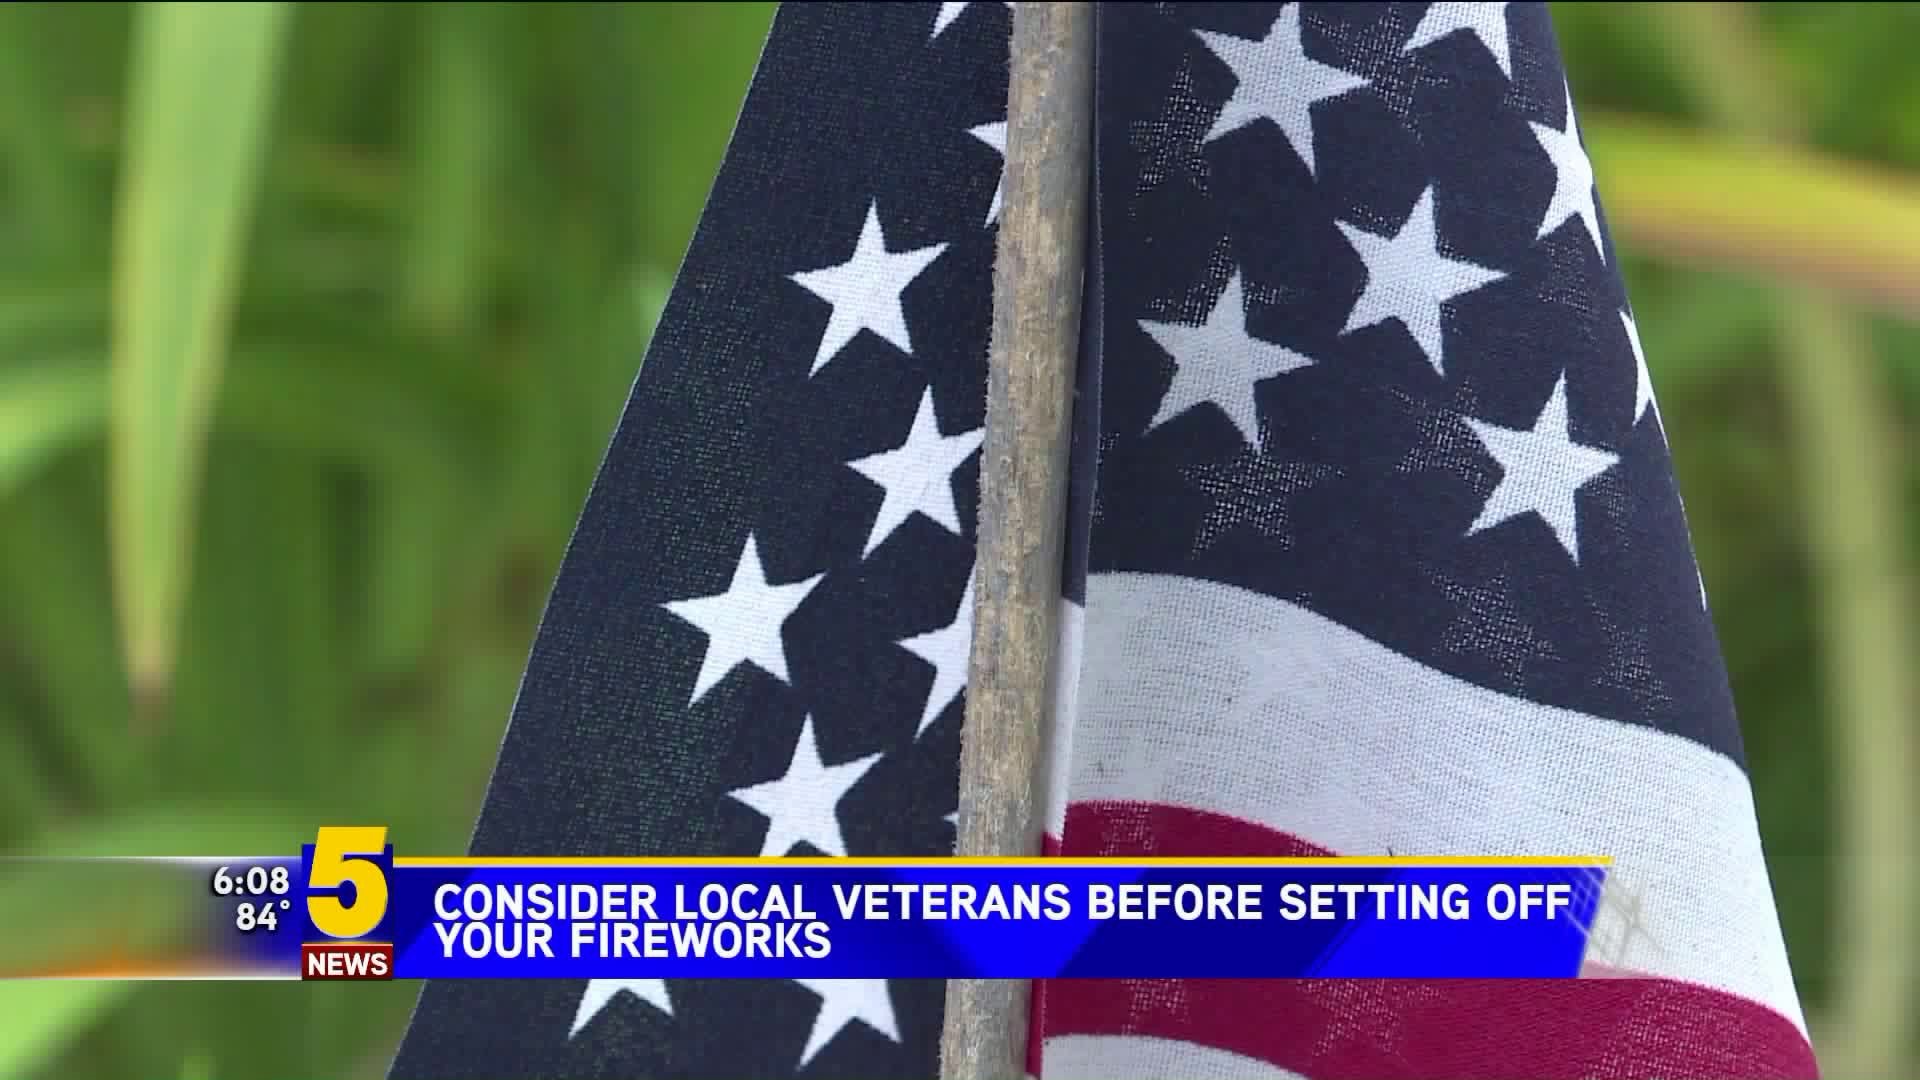 Consider Local Veterans Before Firing off Fireworks